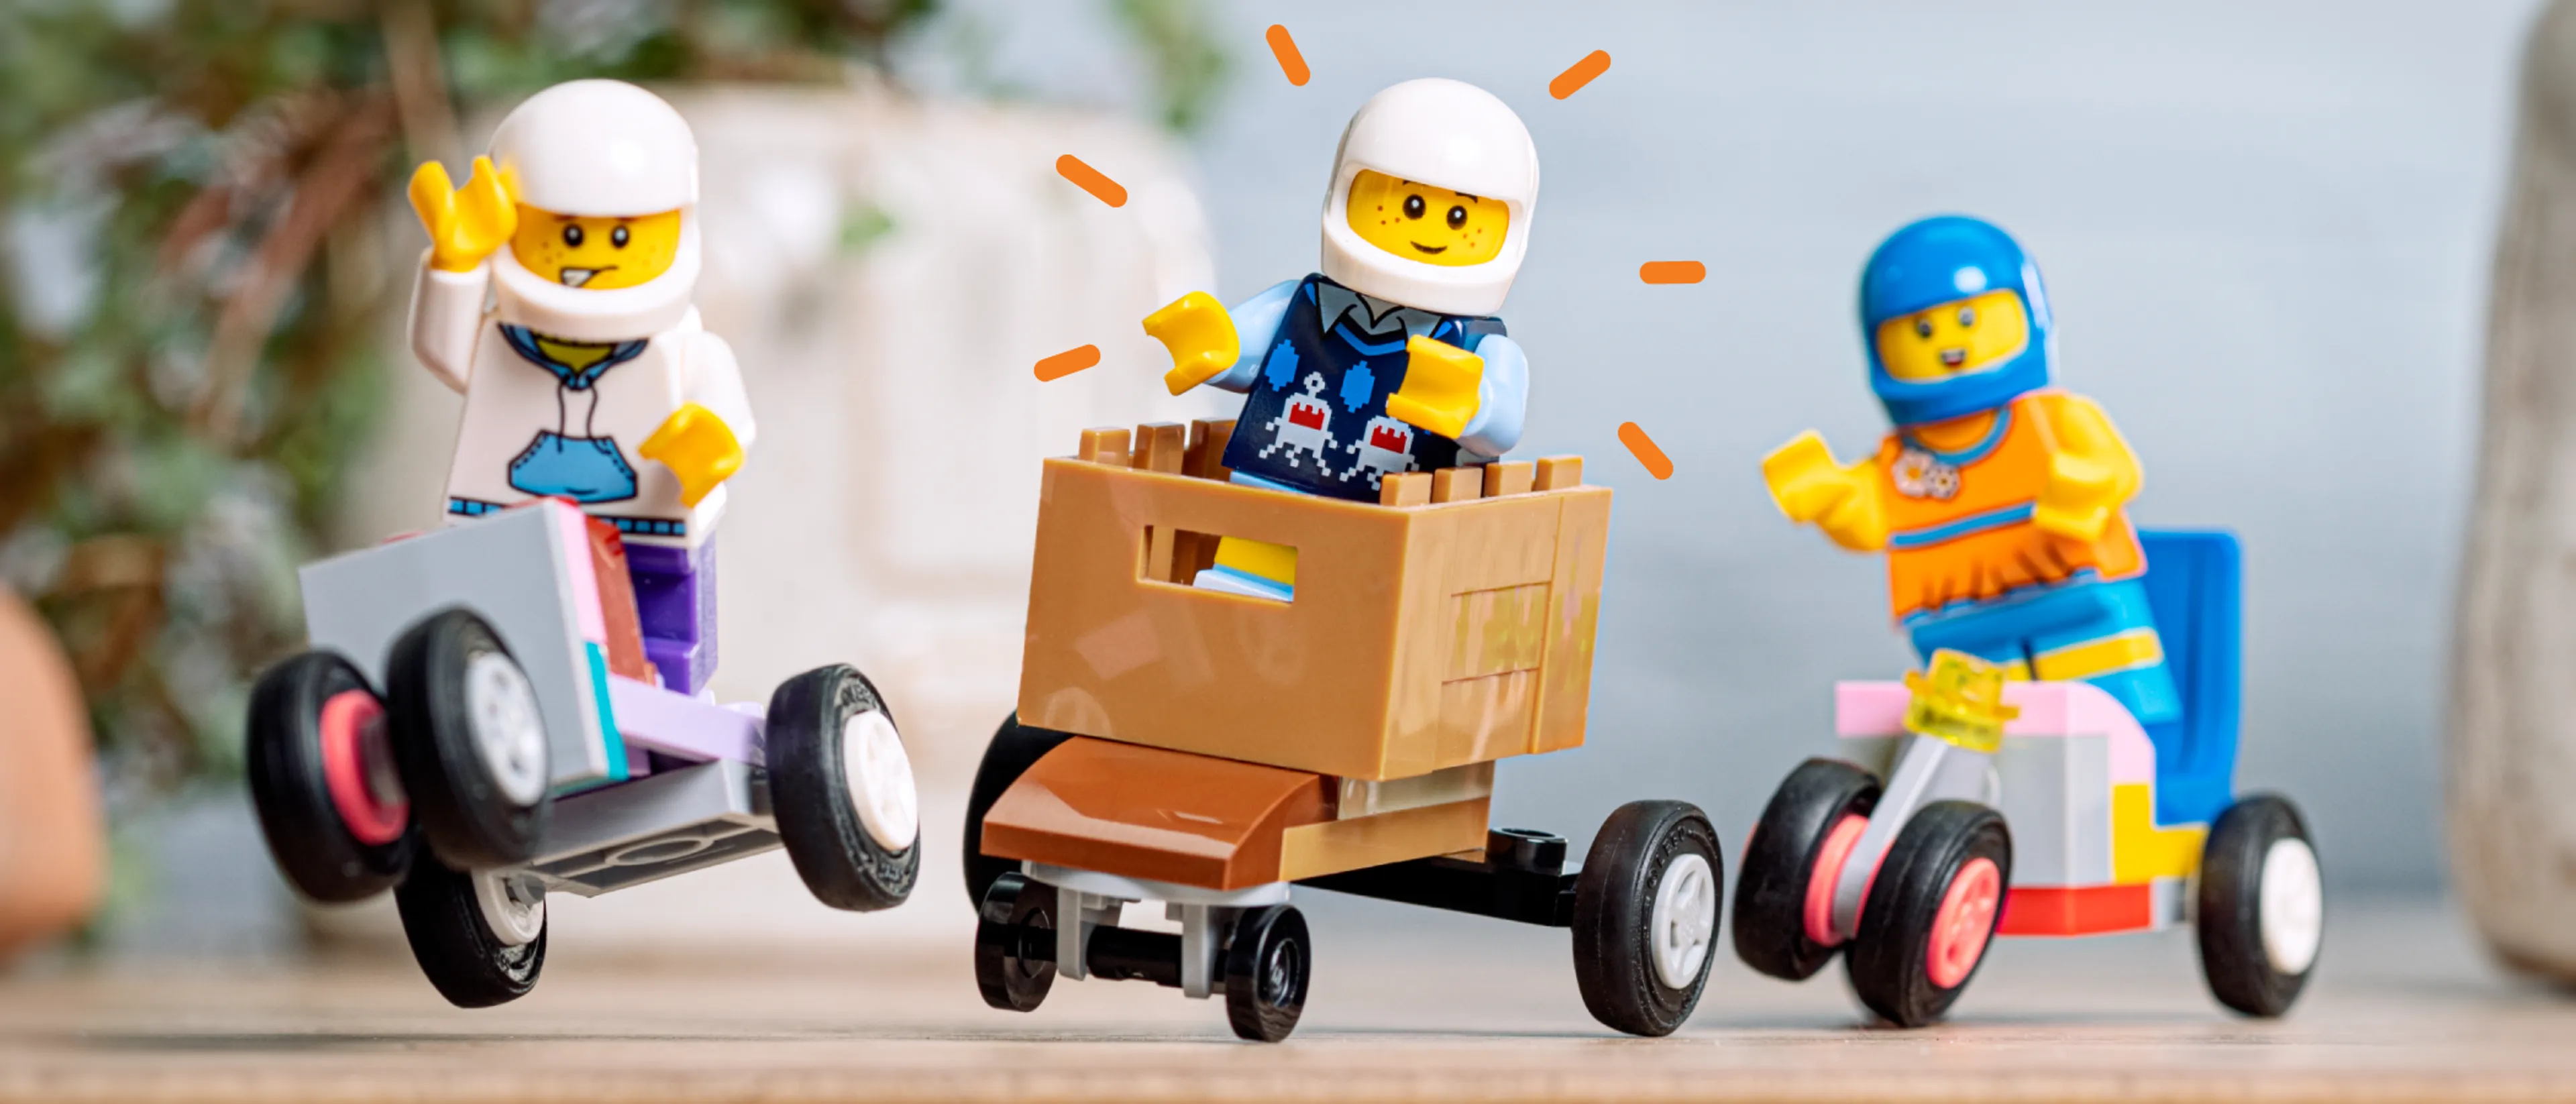 A LEGO minifigure races